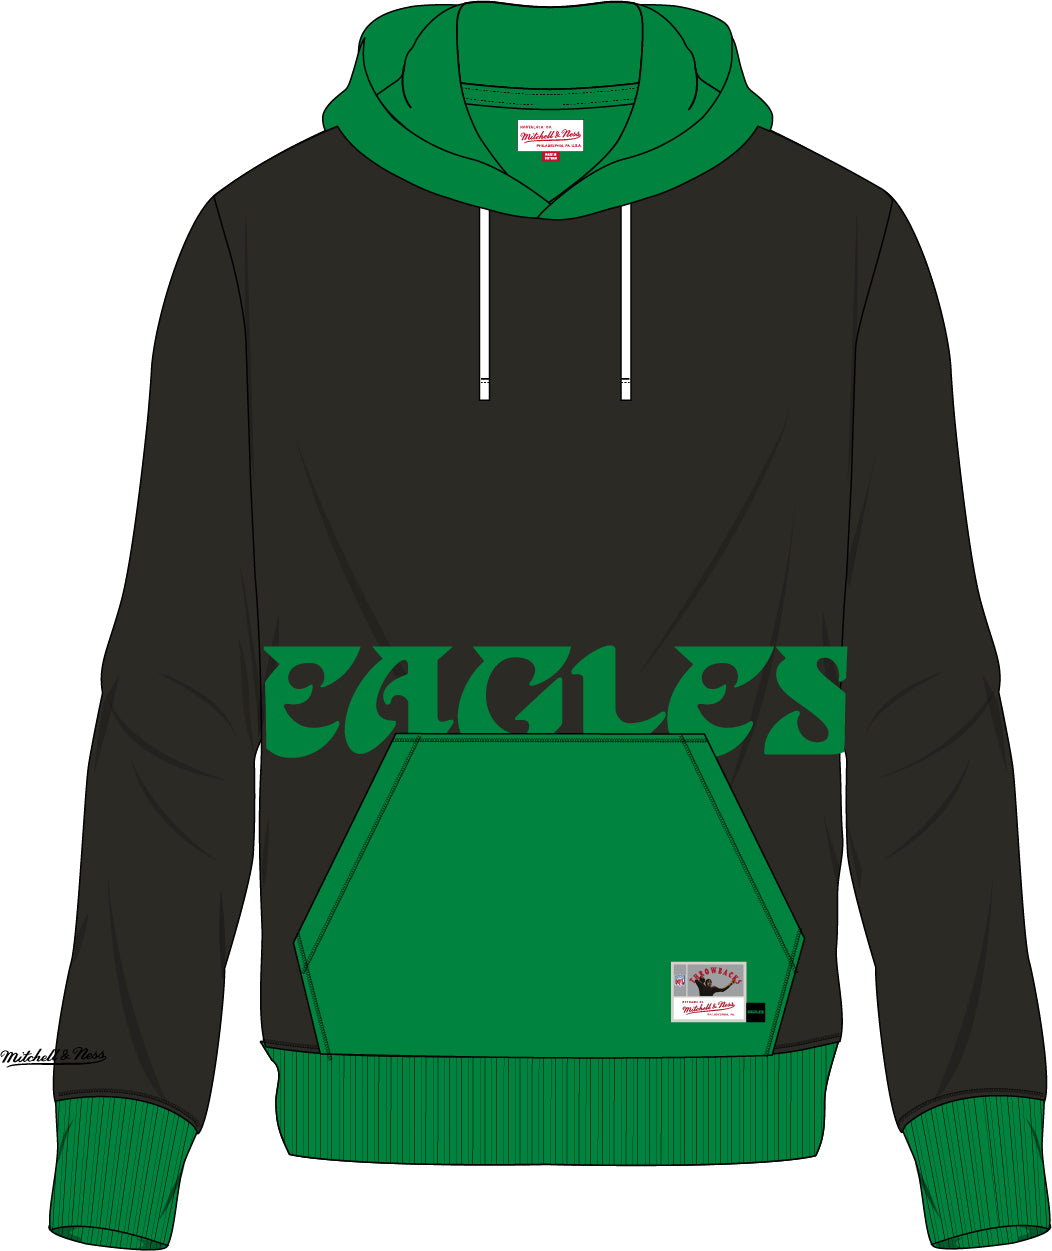 Eagles Crewneck Sweatshirt Tshirt Hoodie Unisex Embroidered Philadelphia  Eagles Sweatshirt Vintage Embroidery Eagles Gear Kelly Green Eagles  Embroidered Shirts NEW - Laughinks